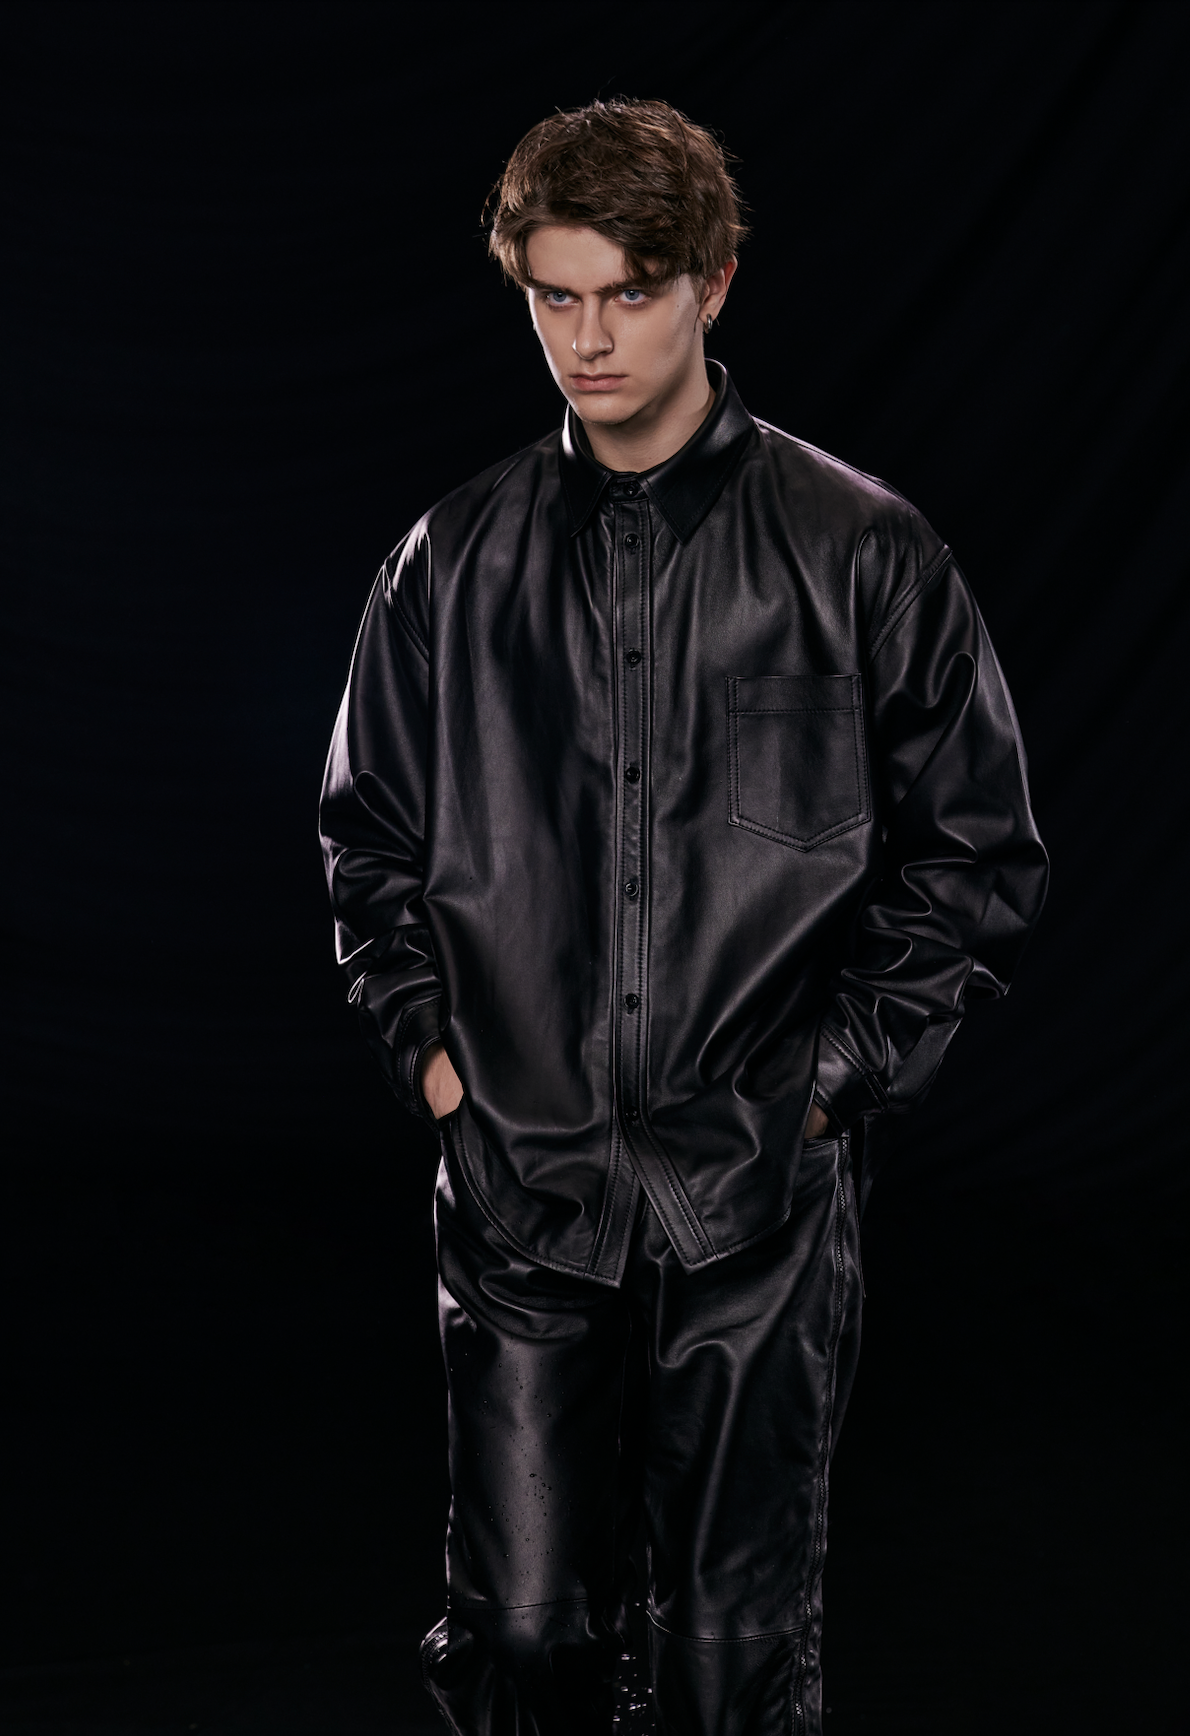 DONCARE "Basic Leather Shirt" - Black